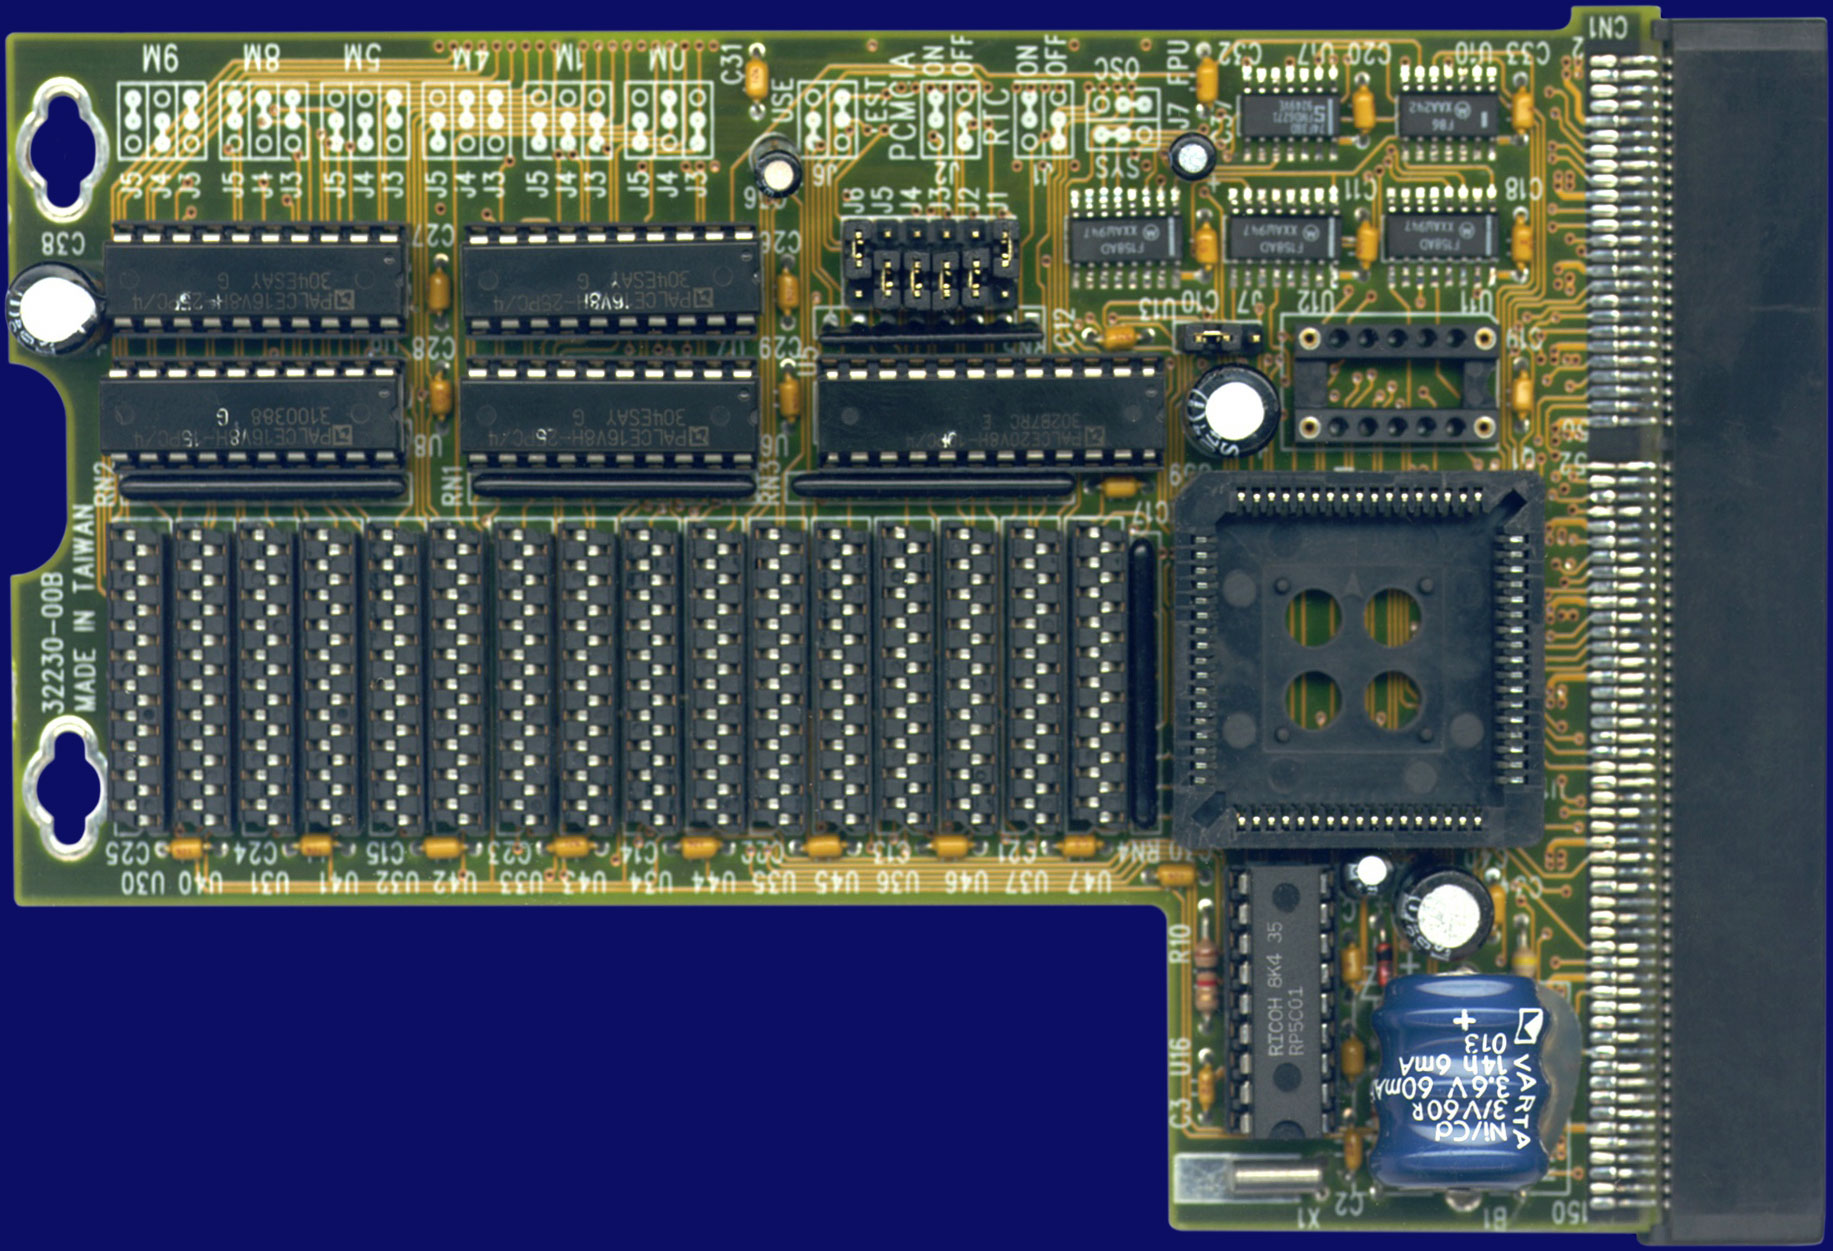 BSC / Alfa Data Memory Master 1200 / AlfaRam 1200 - front side